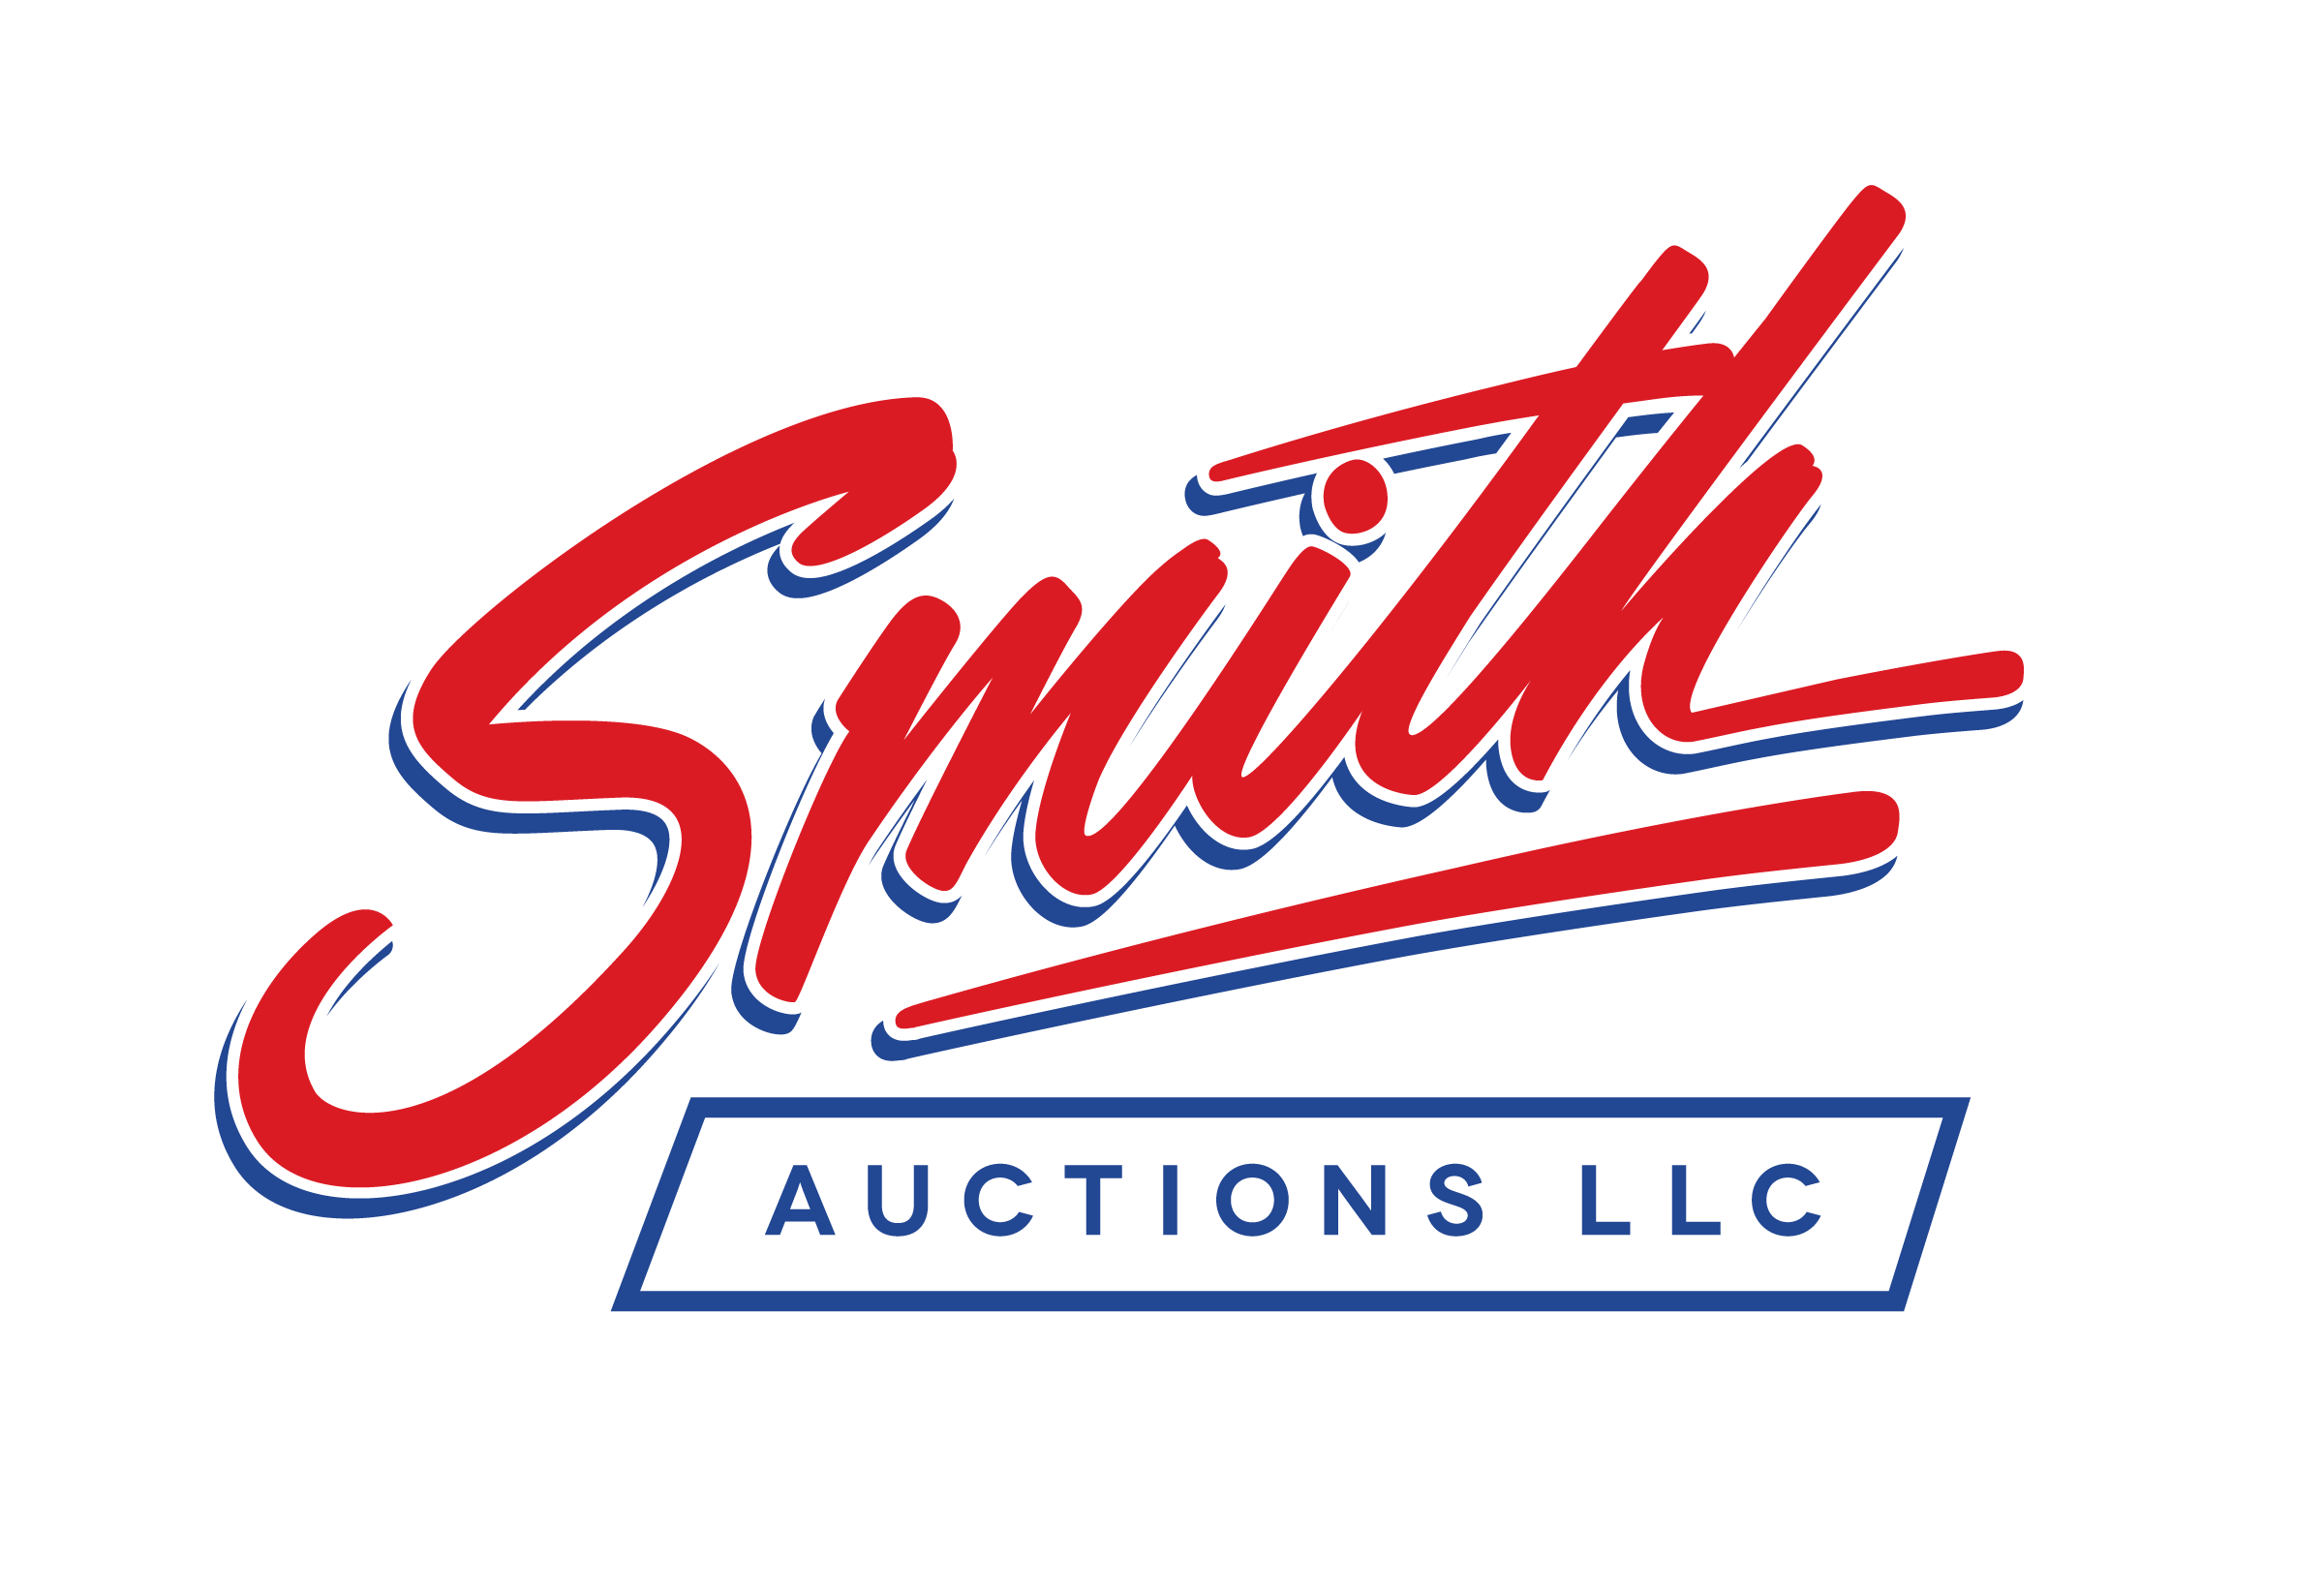 Smith auction LLC logo